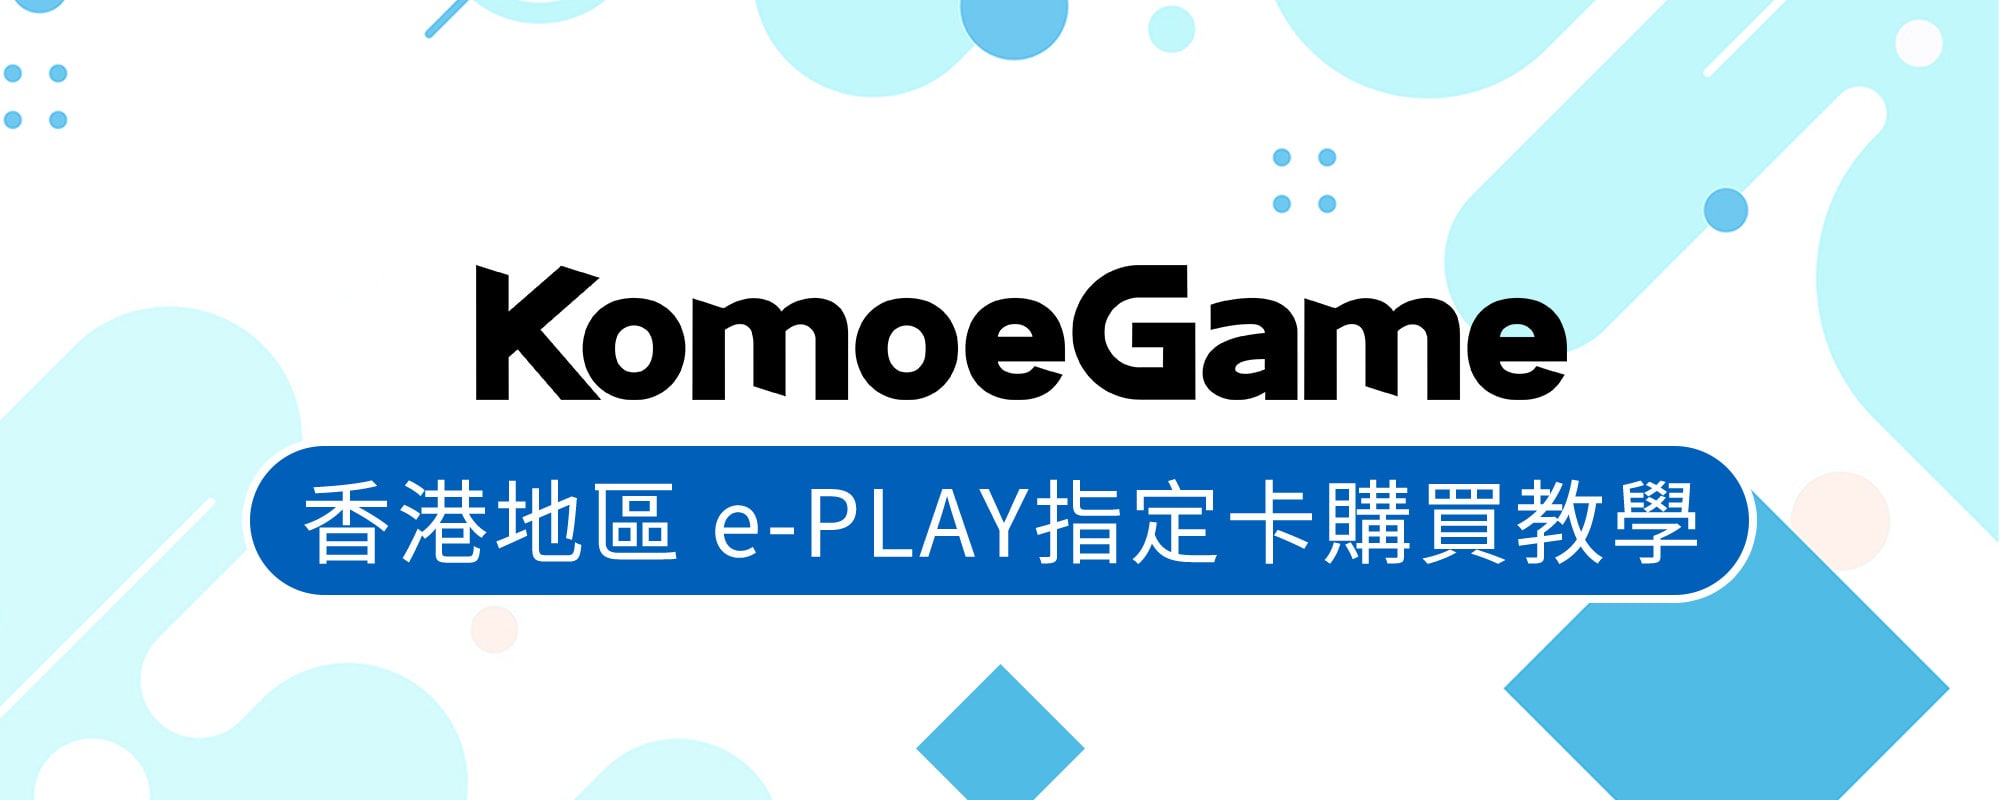   KOMOE GAME儲值 – 香港地區 e-PLAY